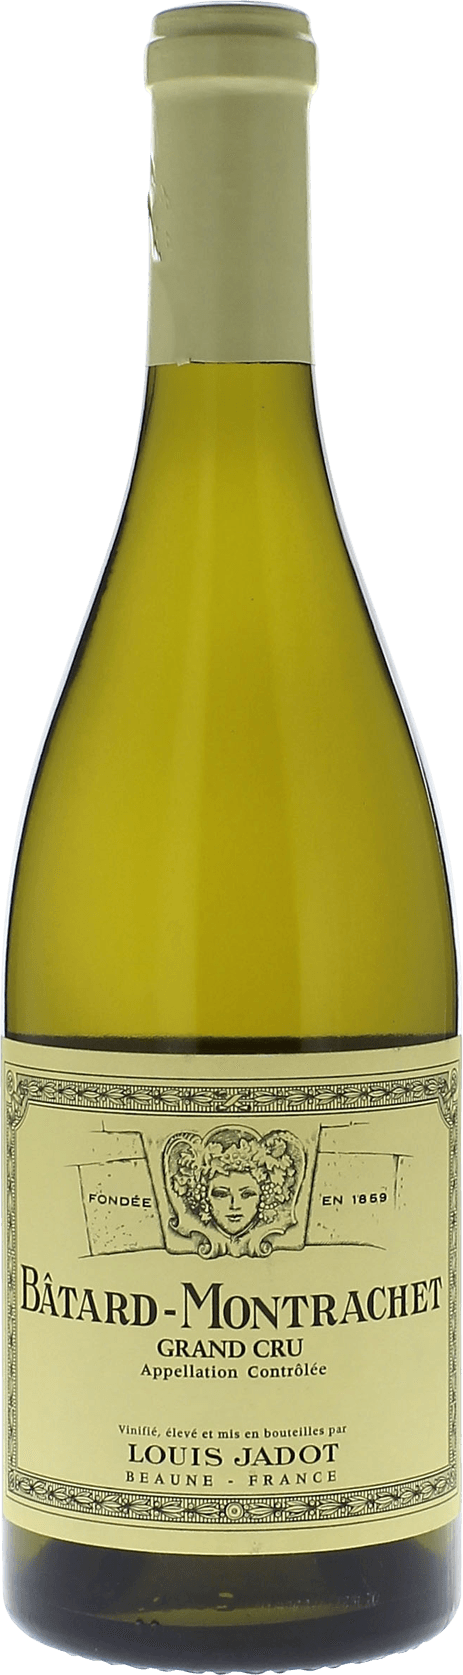 Batard montrachet grand cru 2018  Jadot Louis, Bourgogne blanc